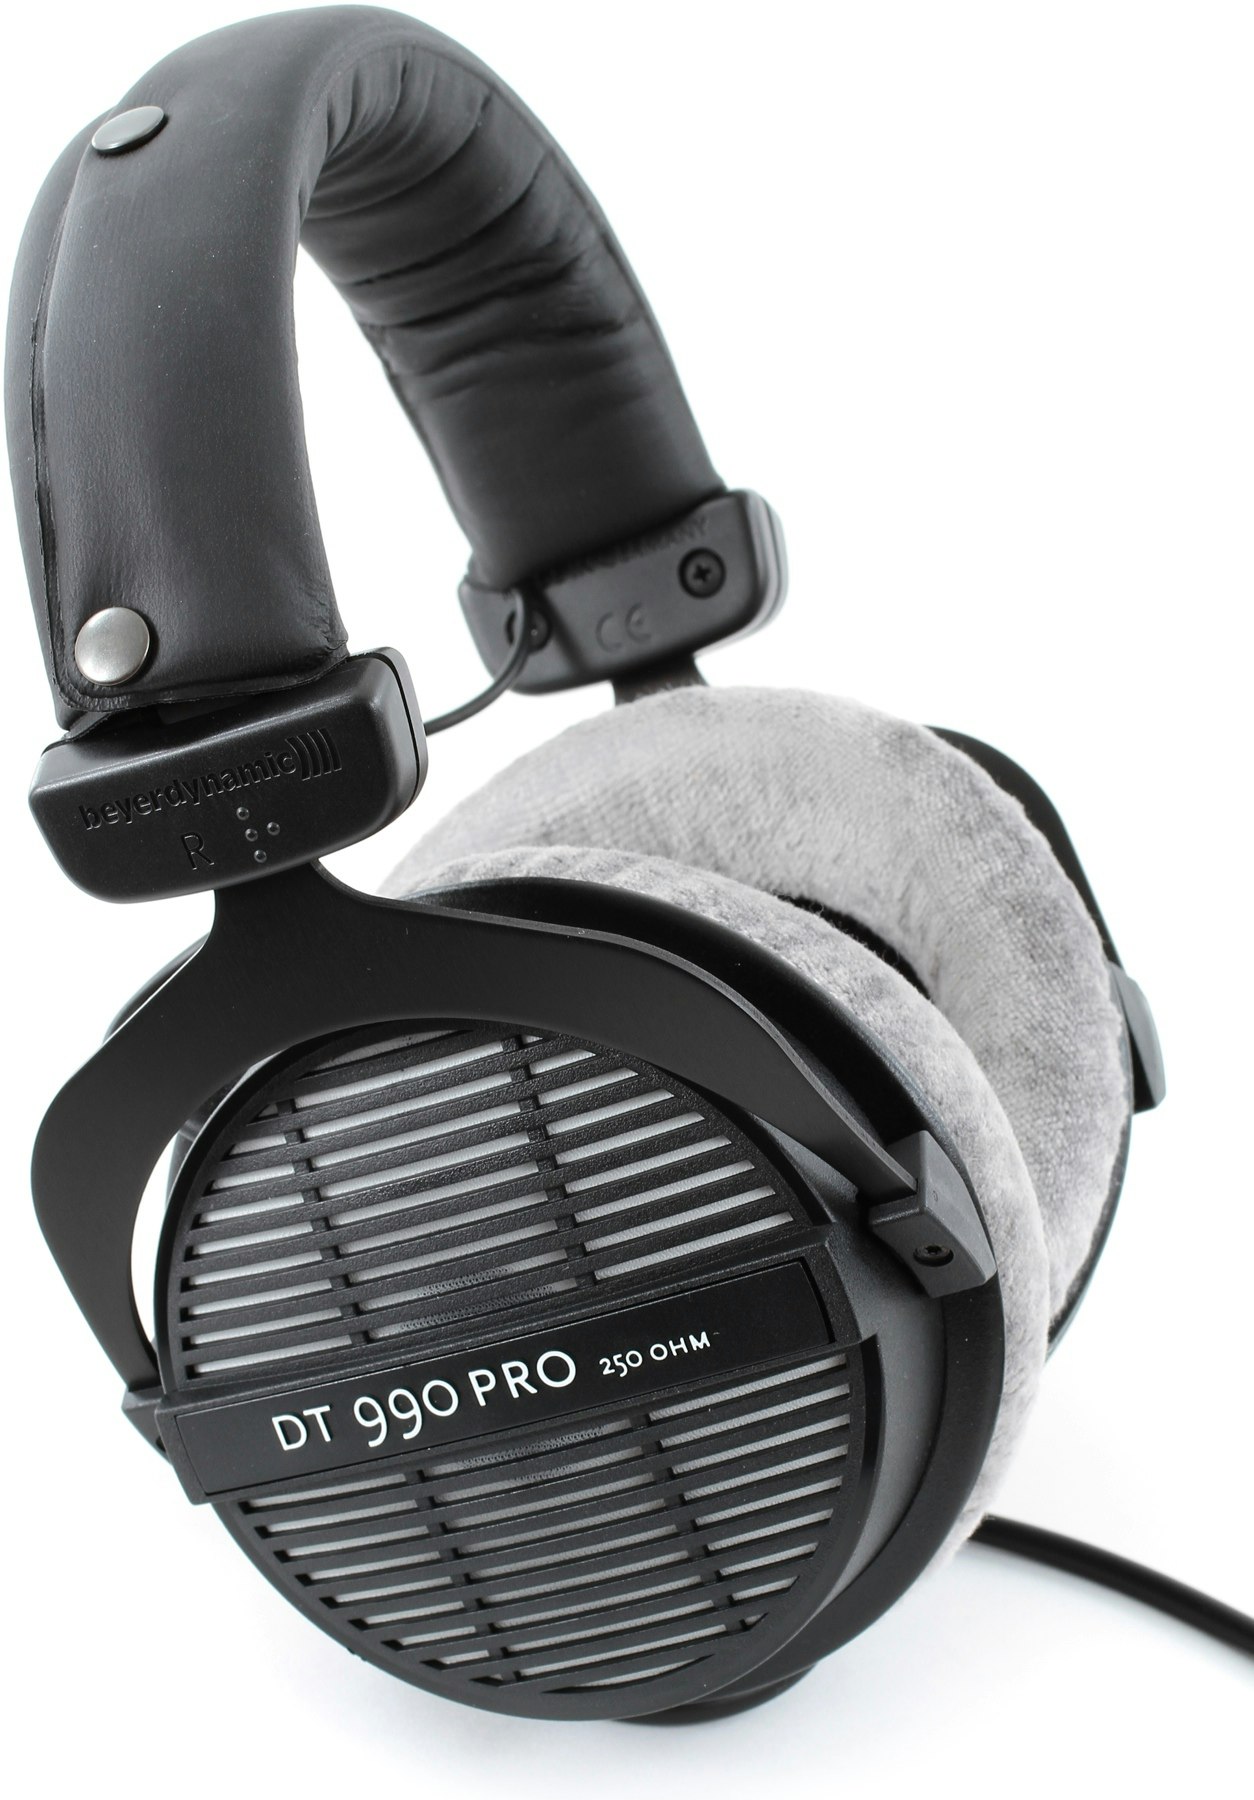 Shop Beyerdynamic DT 990 Pro Headphones & Discover Community 